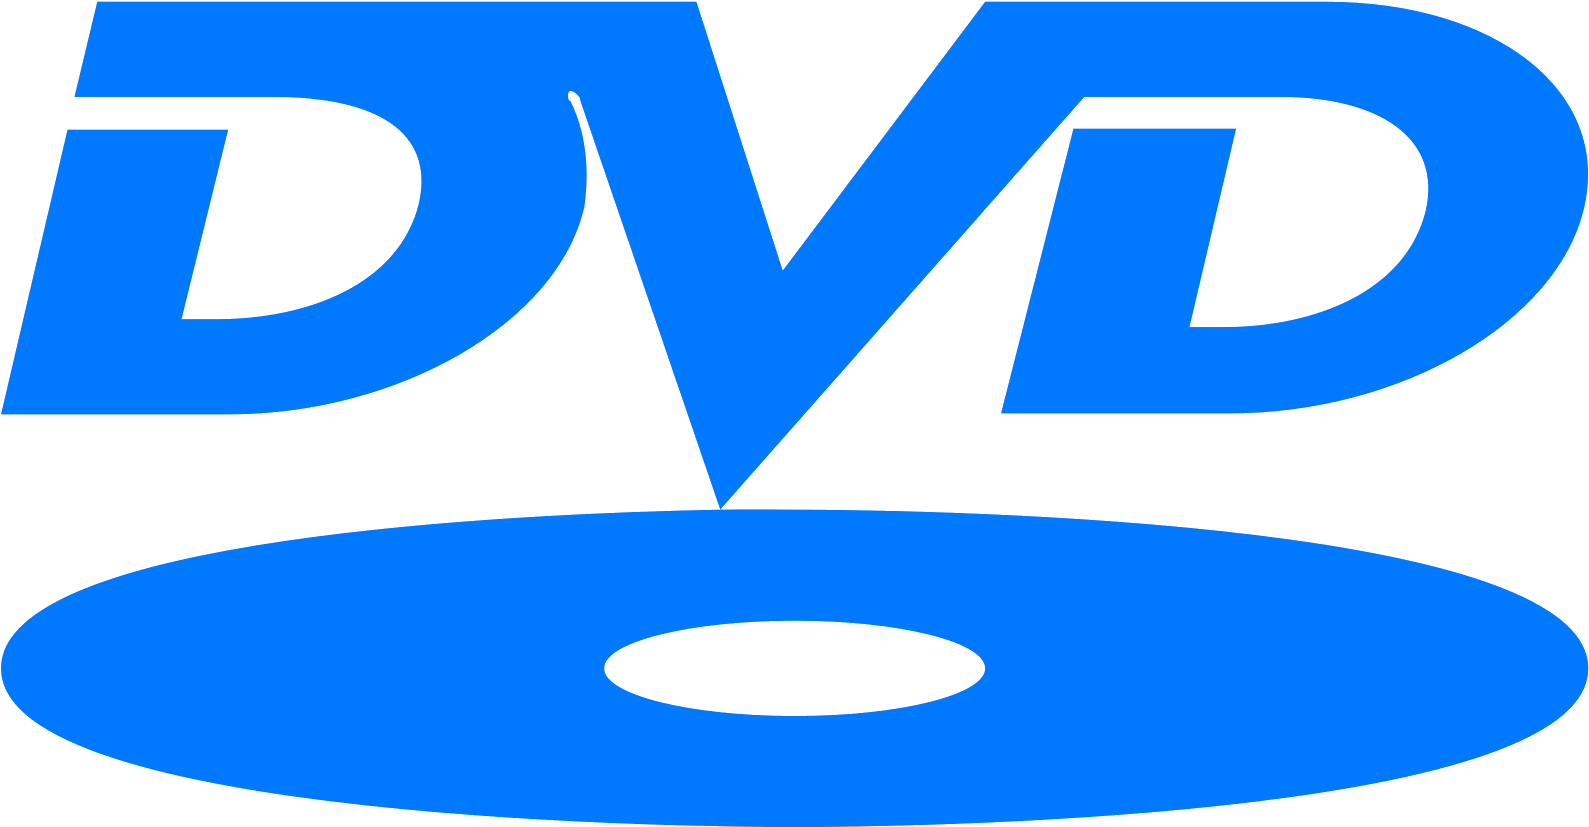 DVD Disc Logo - Hd Dvd Dvd-video Logo - Blu-ray Disc - (1600x1600) Png Clipart Download